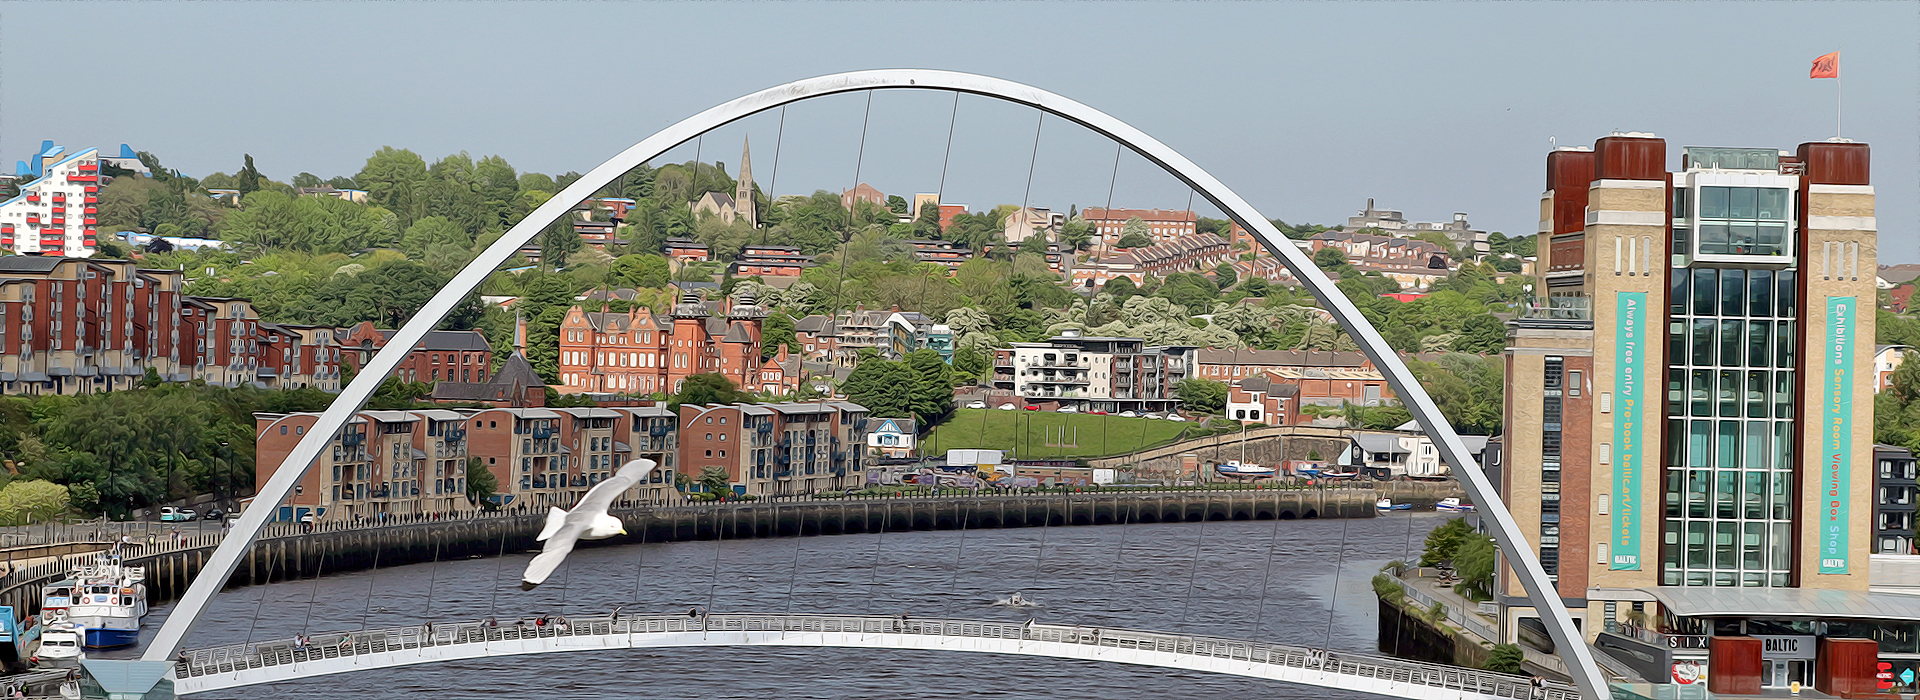 Millennium Bridge - Newcastle upon Tyne - River Tyne